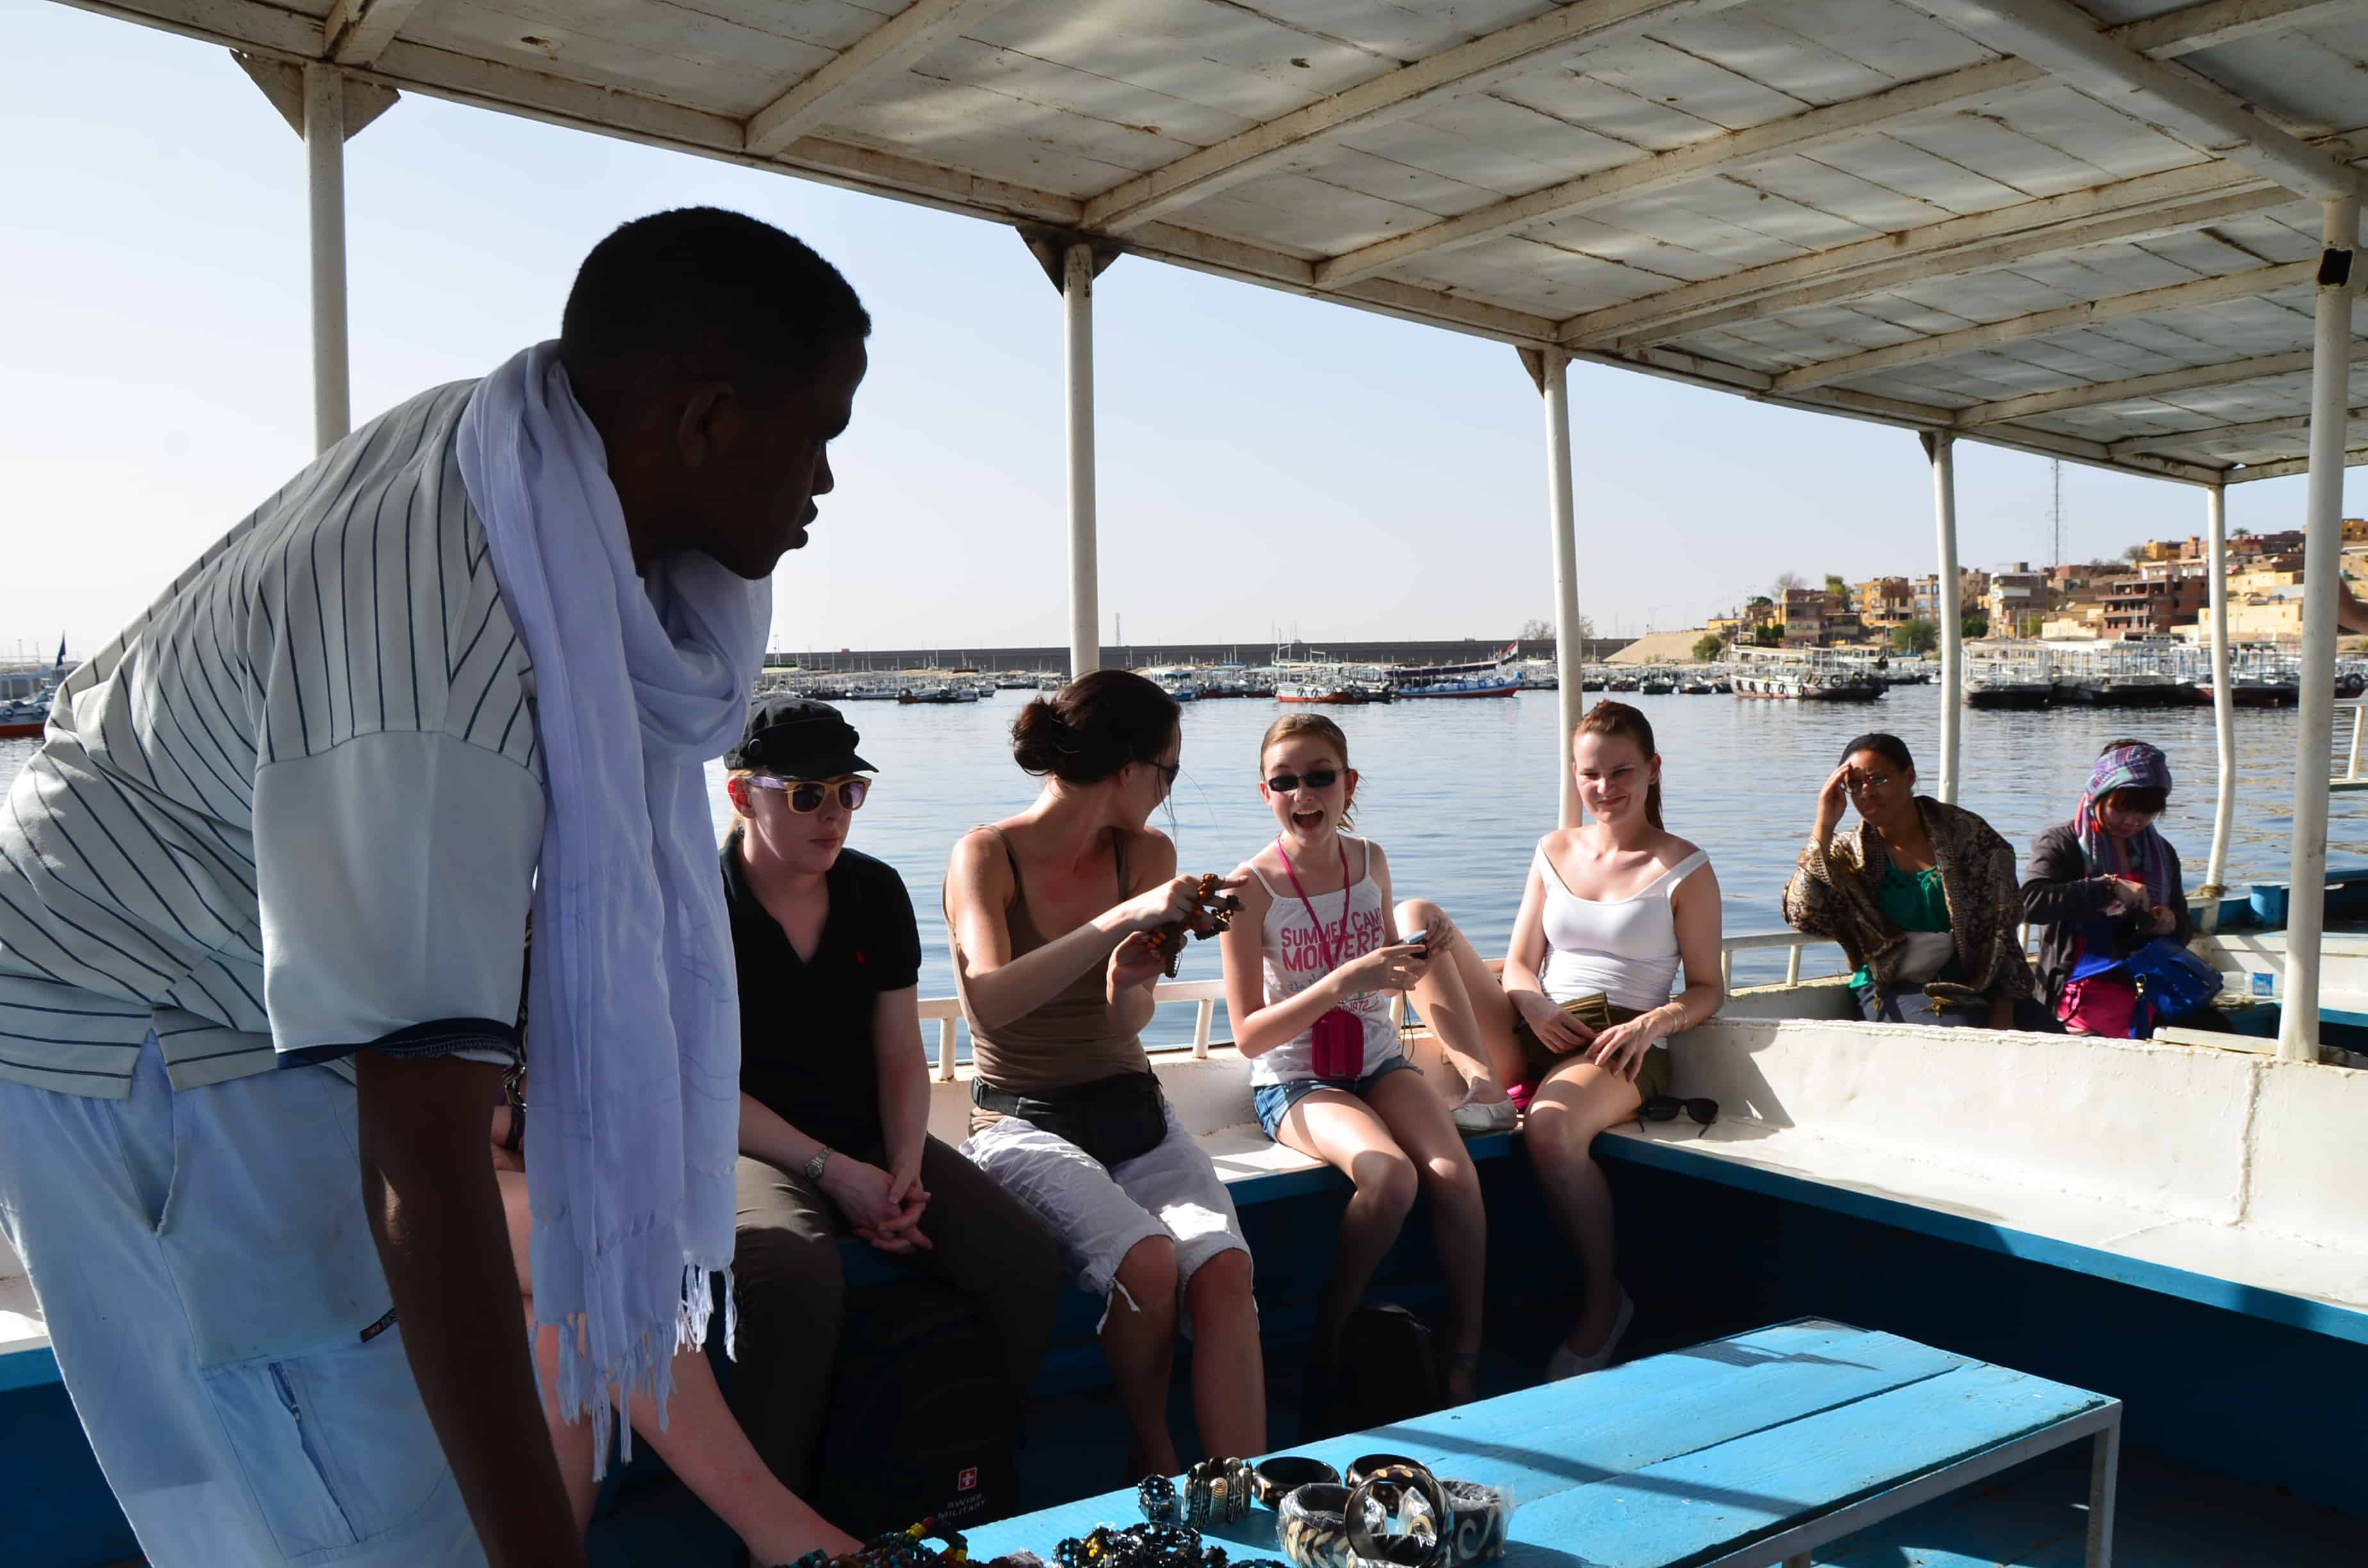 Boat ride to Agilkia Island in Egypt